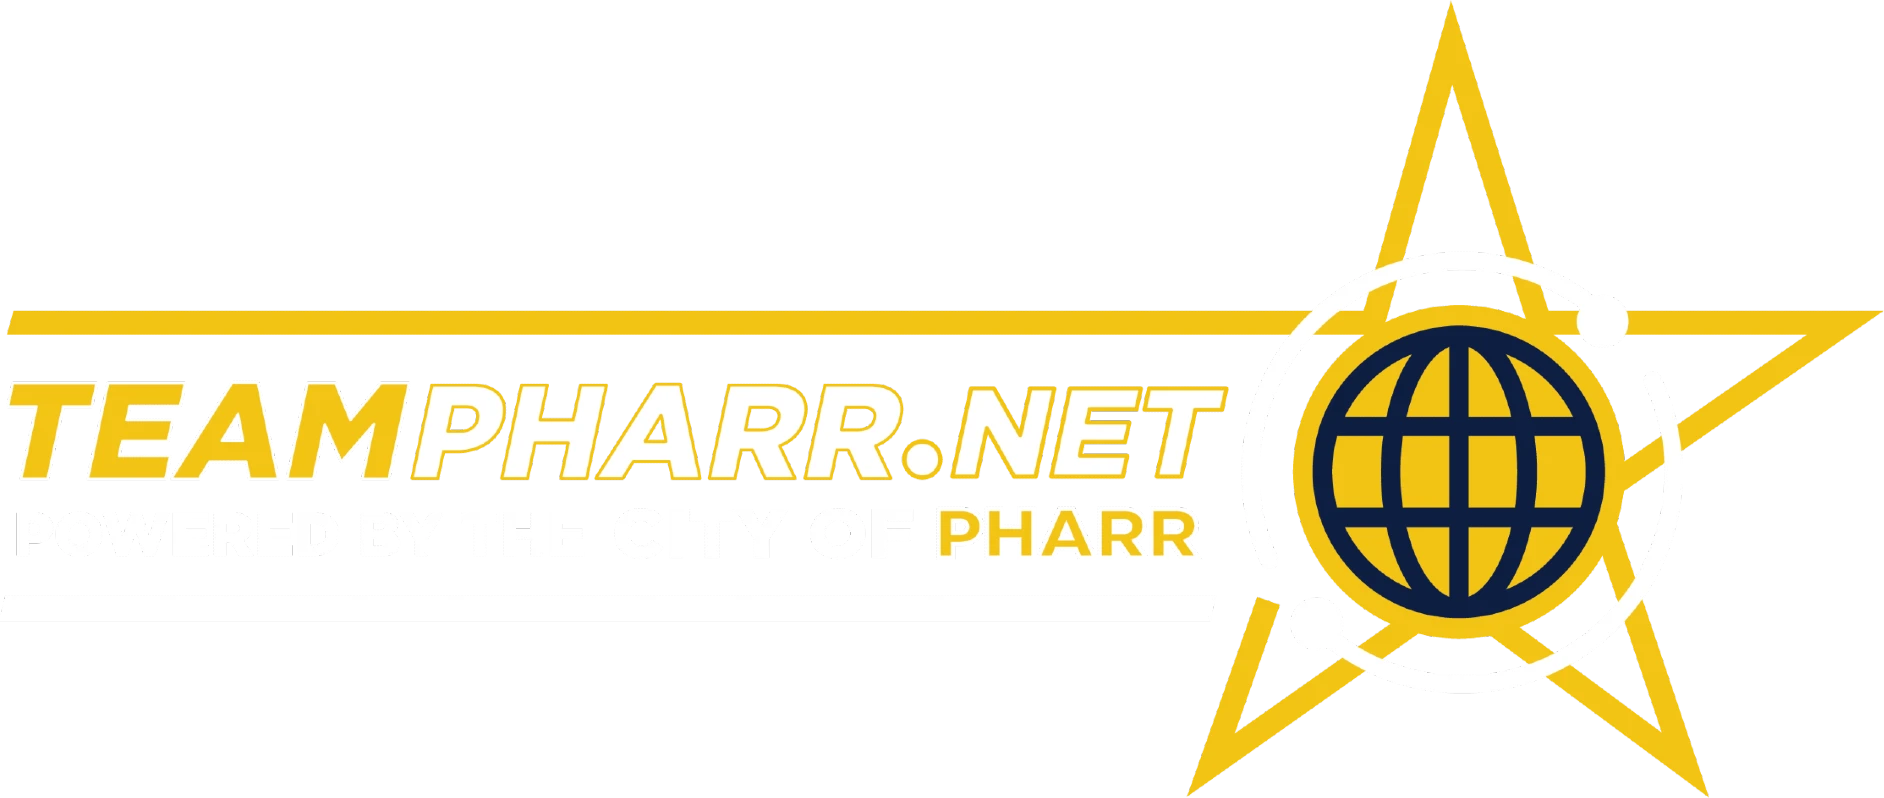 LOGO: TeamPharr.net - Powered by the City of Pharr